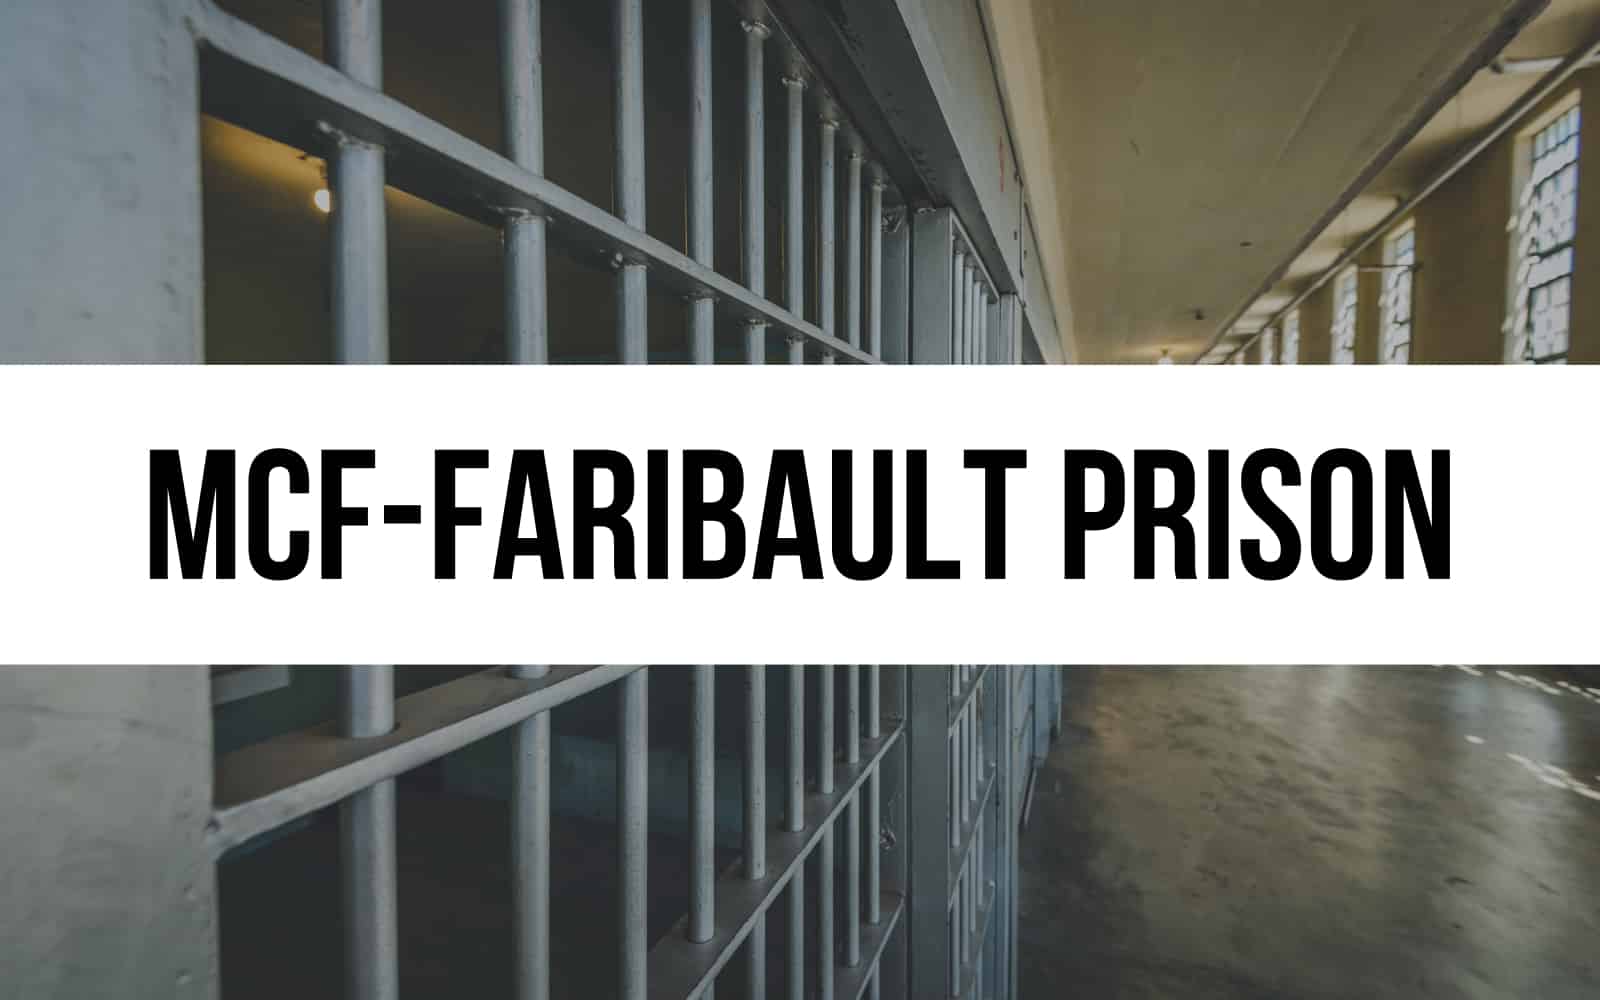 Faribault Prison